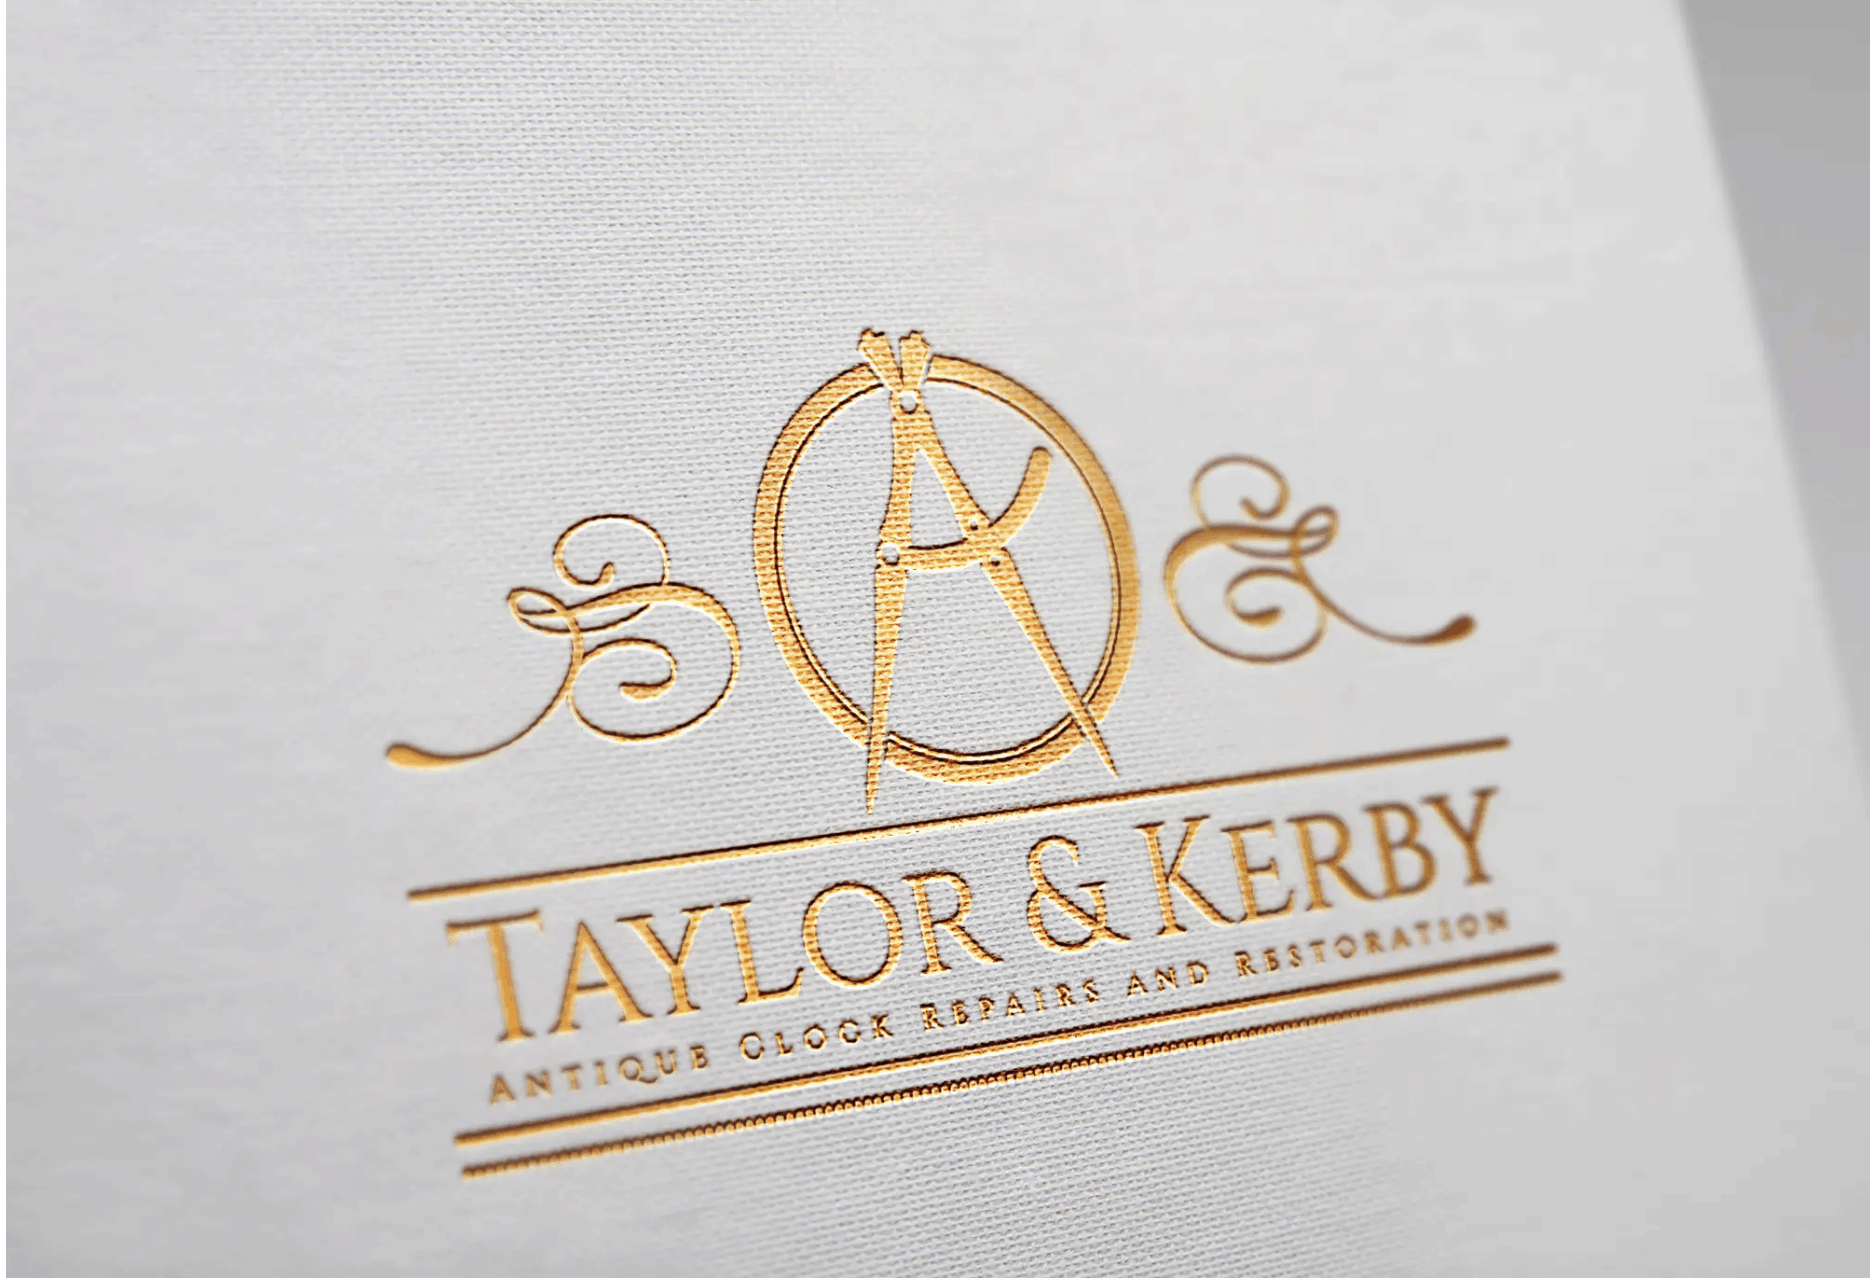 Custom logo created on Fiverr - Taylor & Kerby